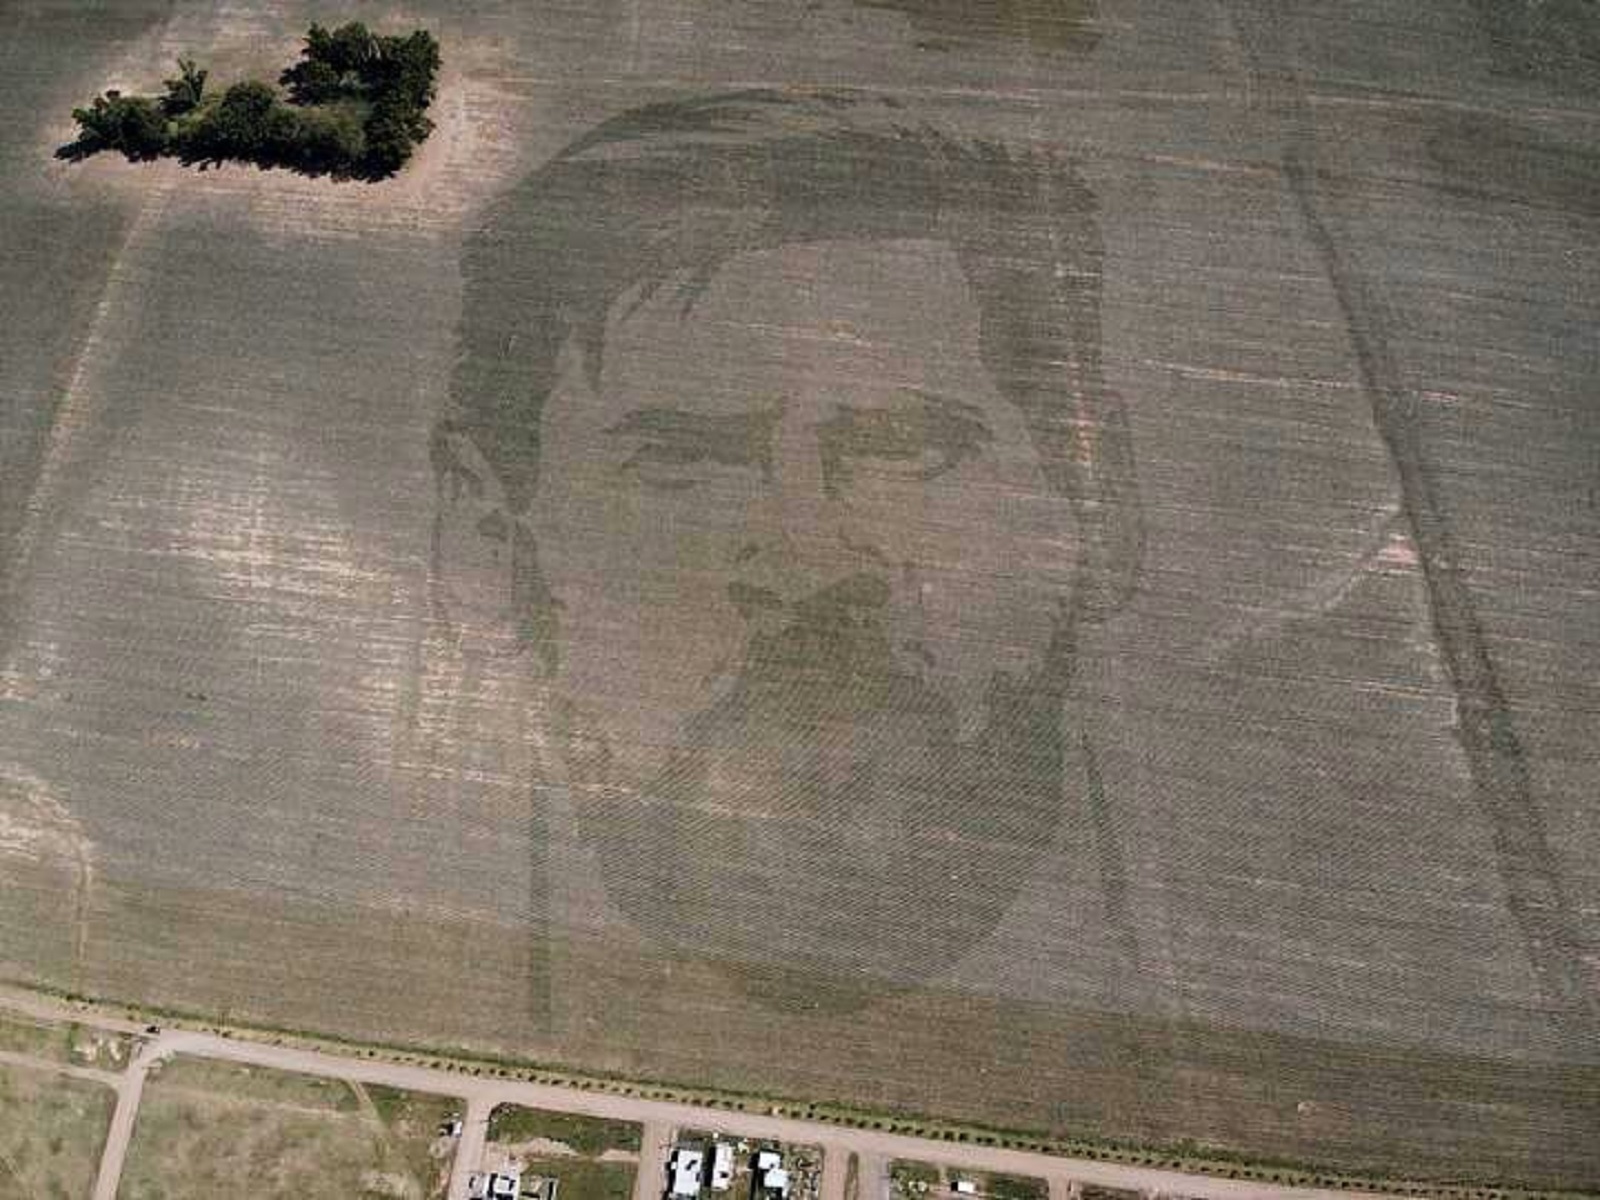 “Siembran” cara de Messi en campos de maíz en Argentina